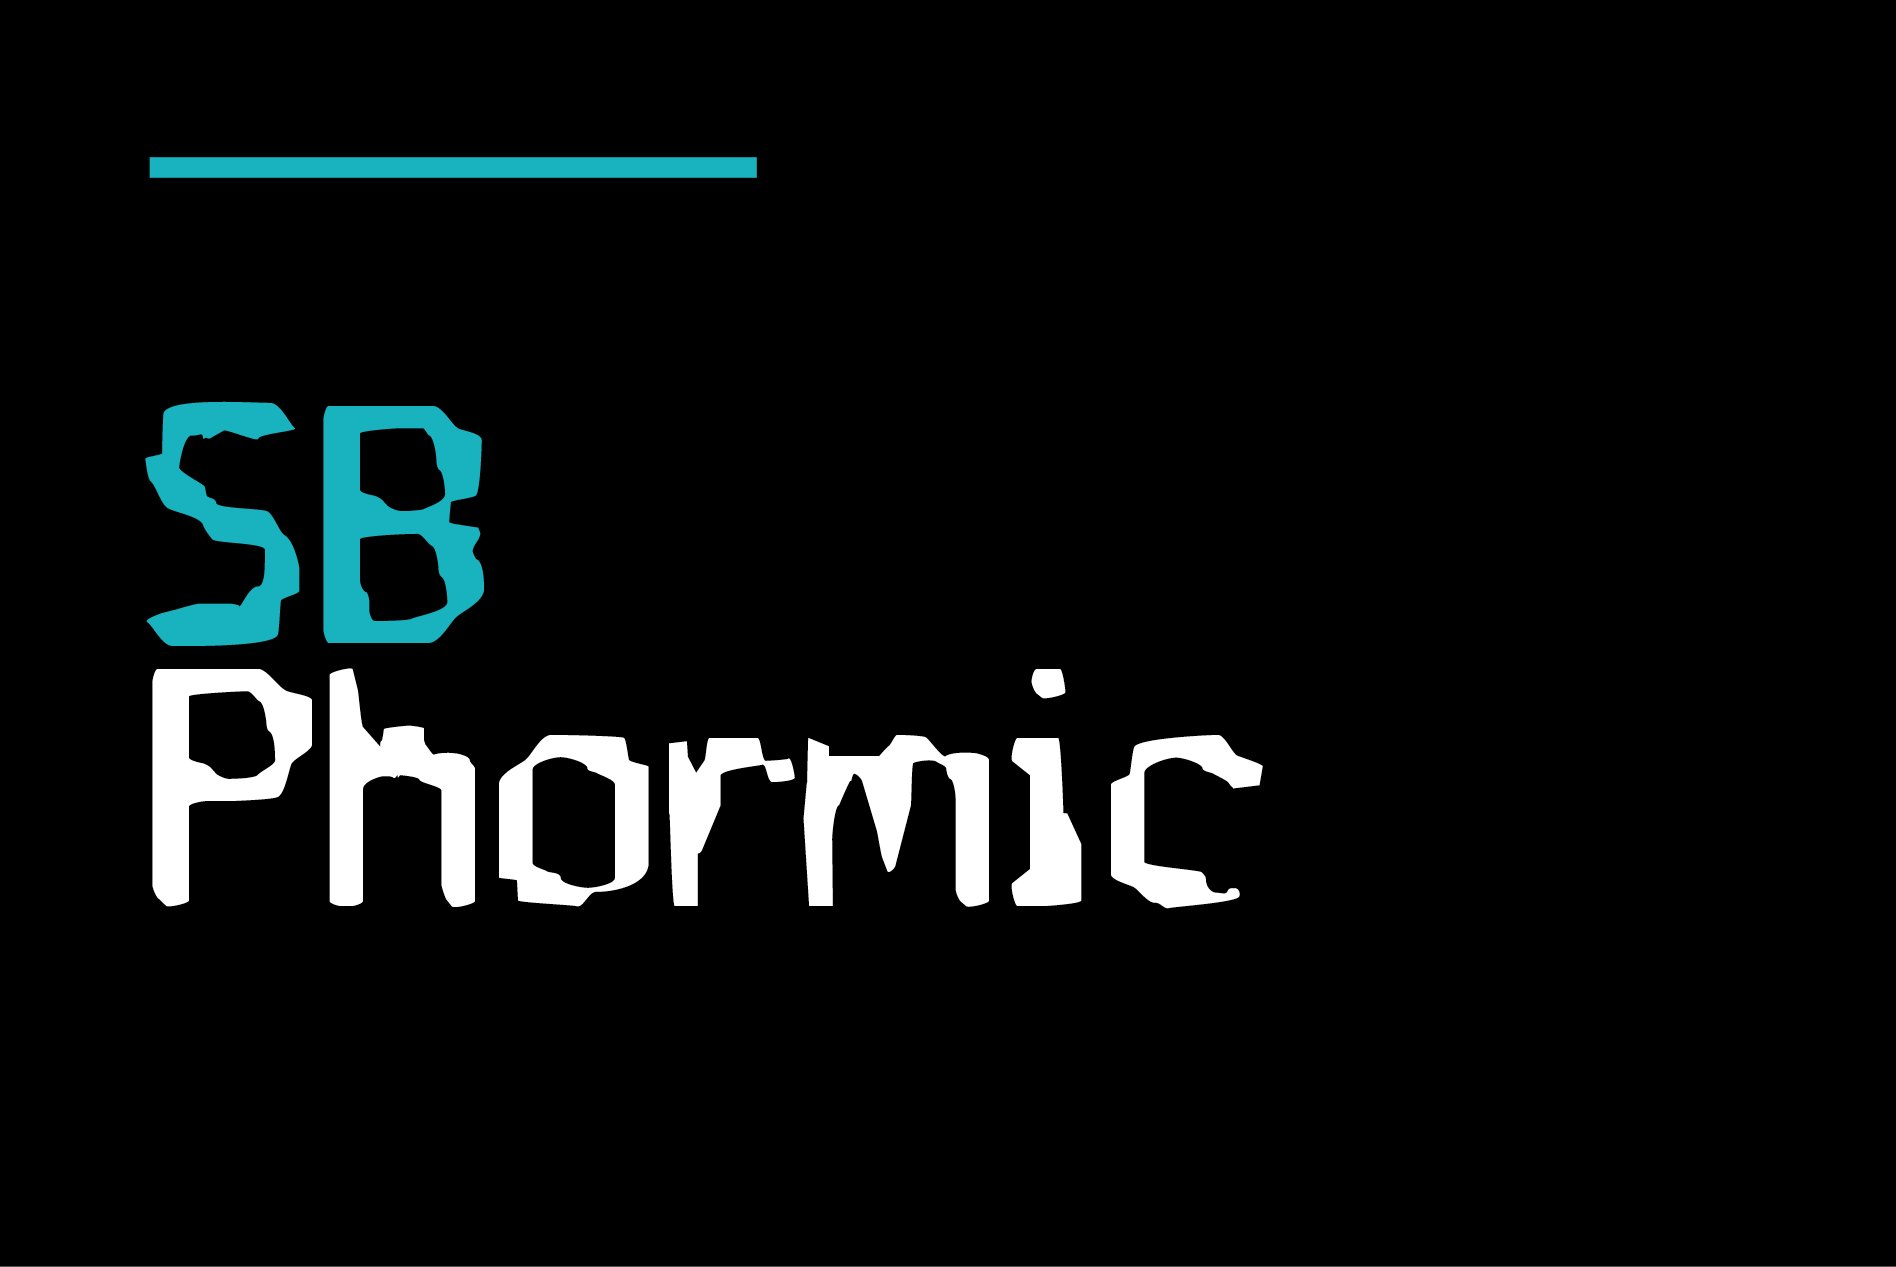 SB Phormic